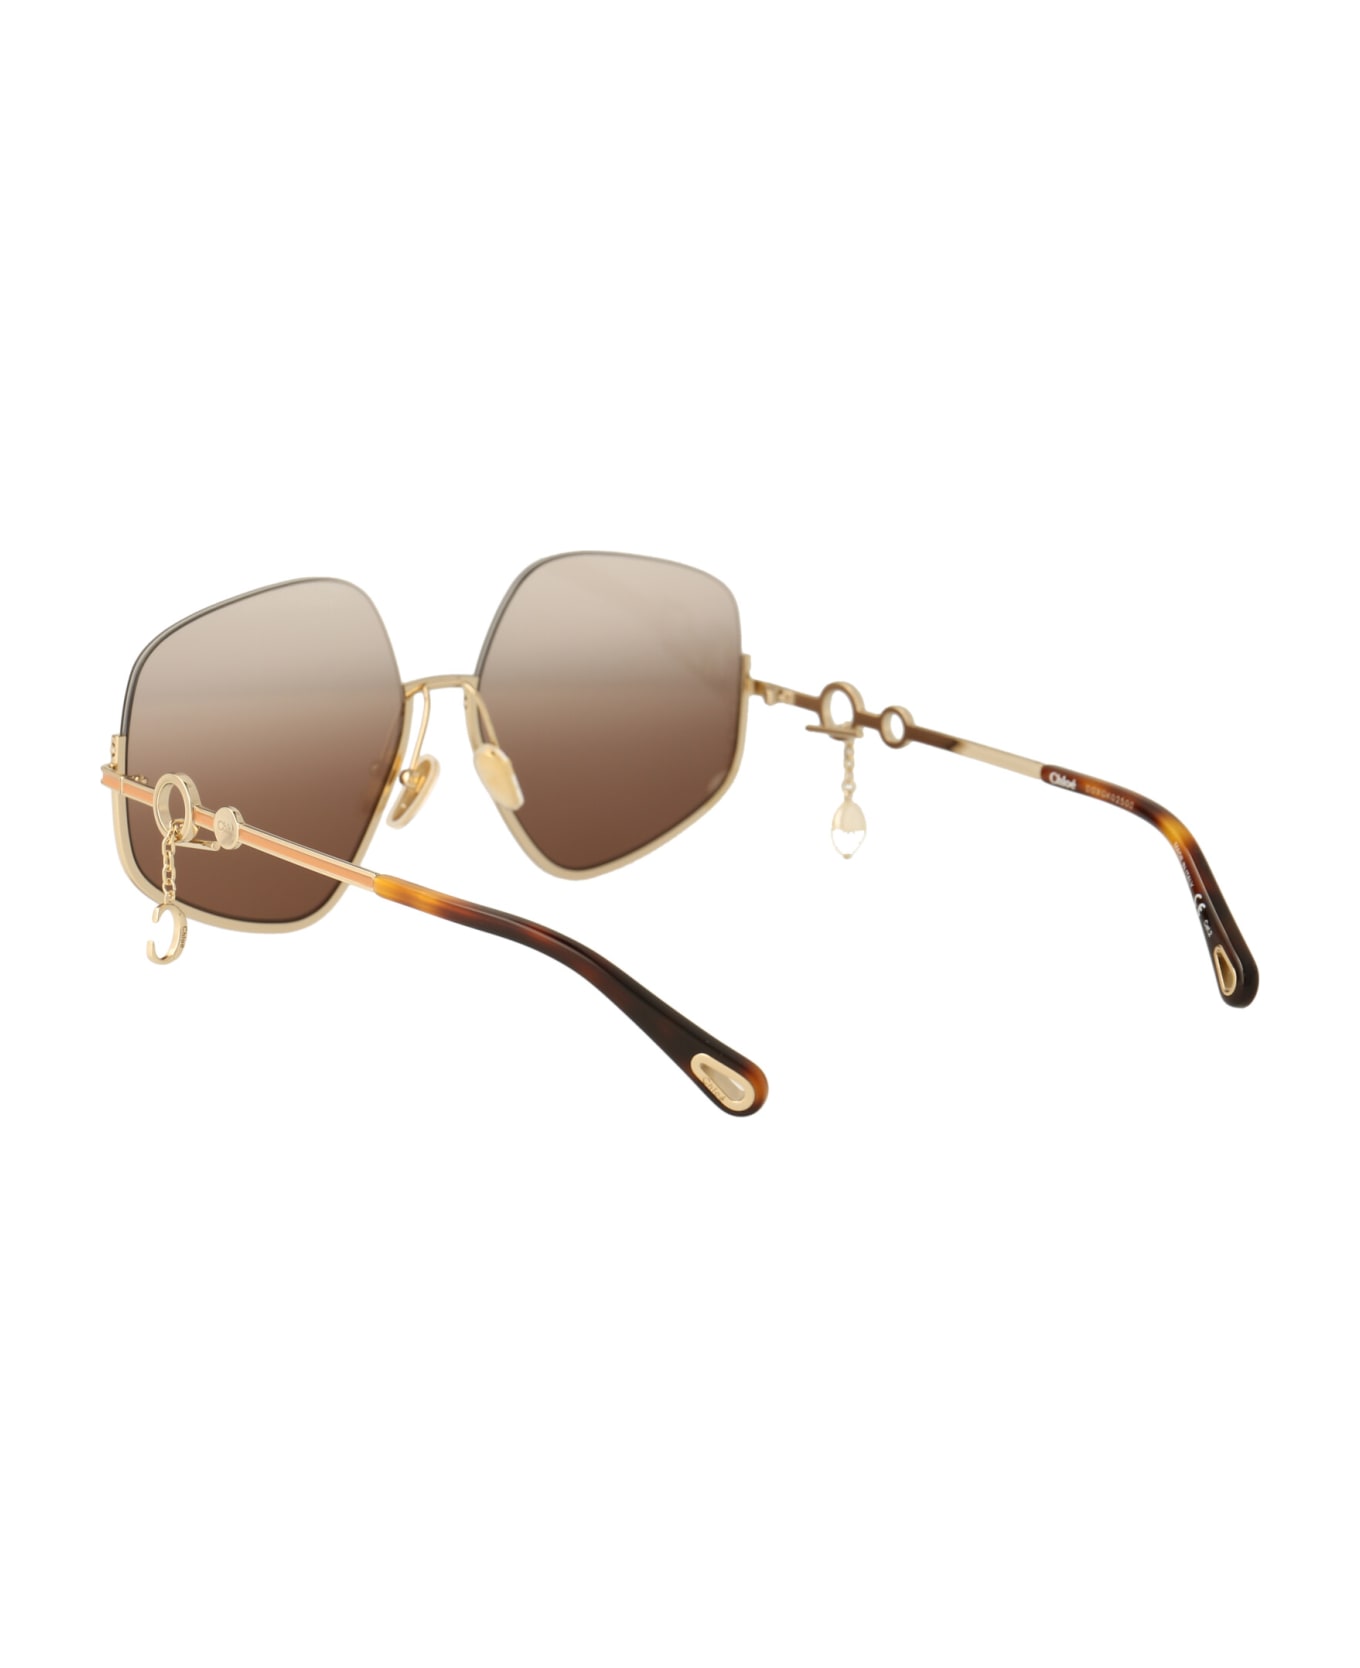 Chloé Eyewear Ch0068s Sunglasses - 003 GOLD GOLD BROWN